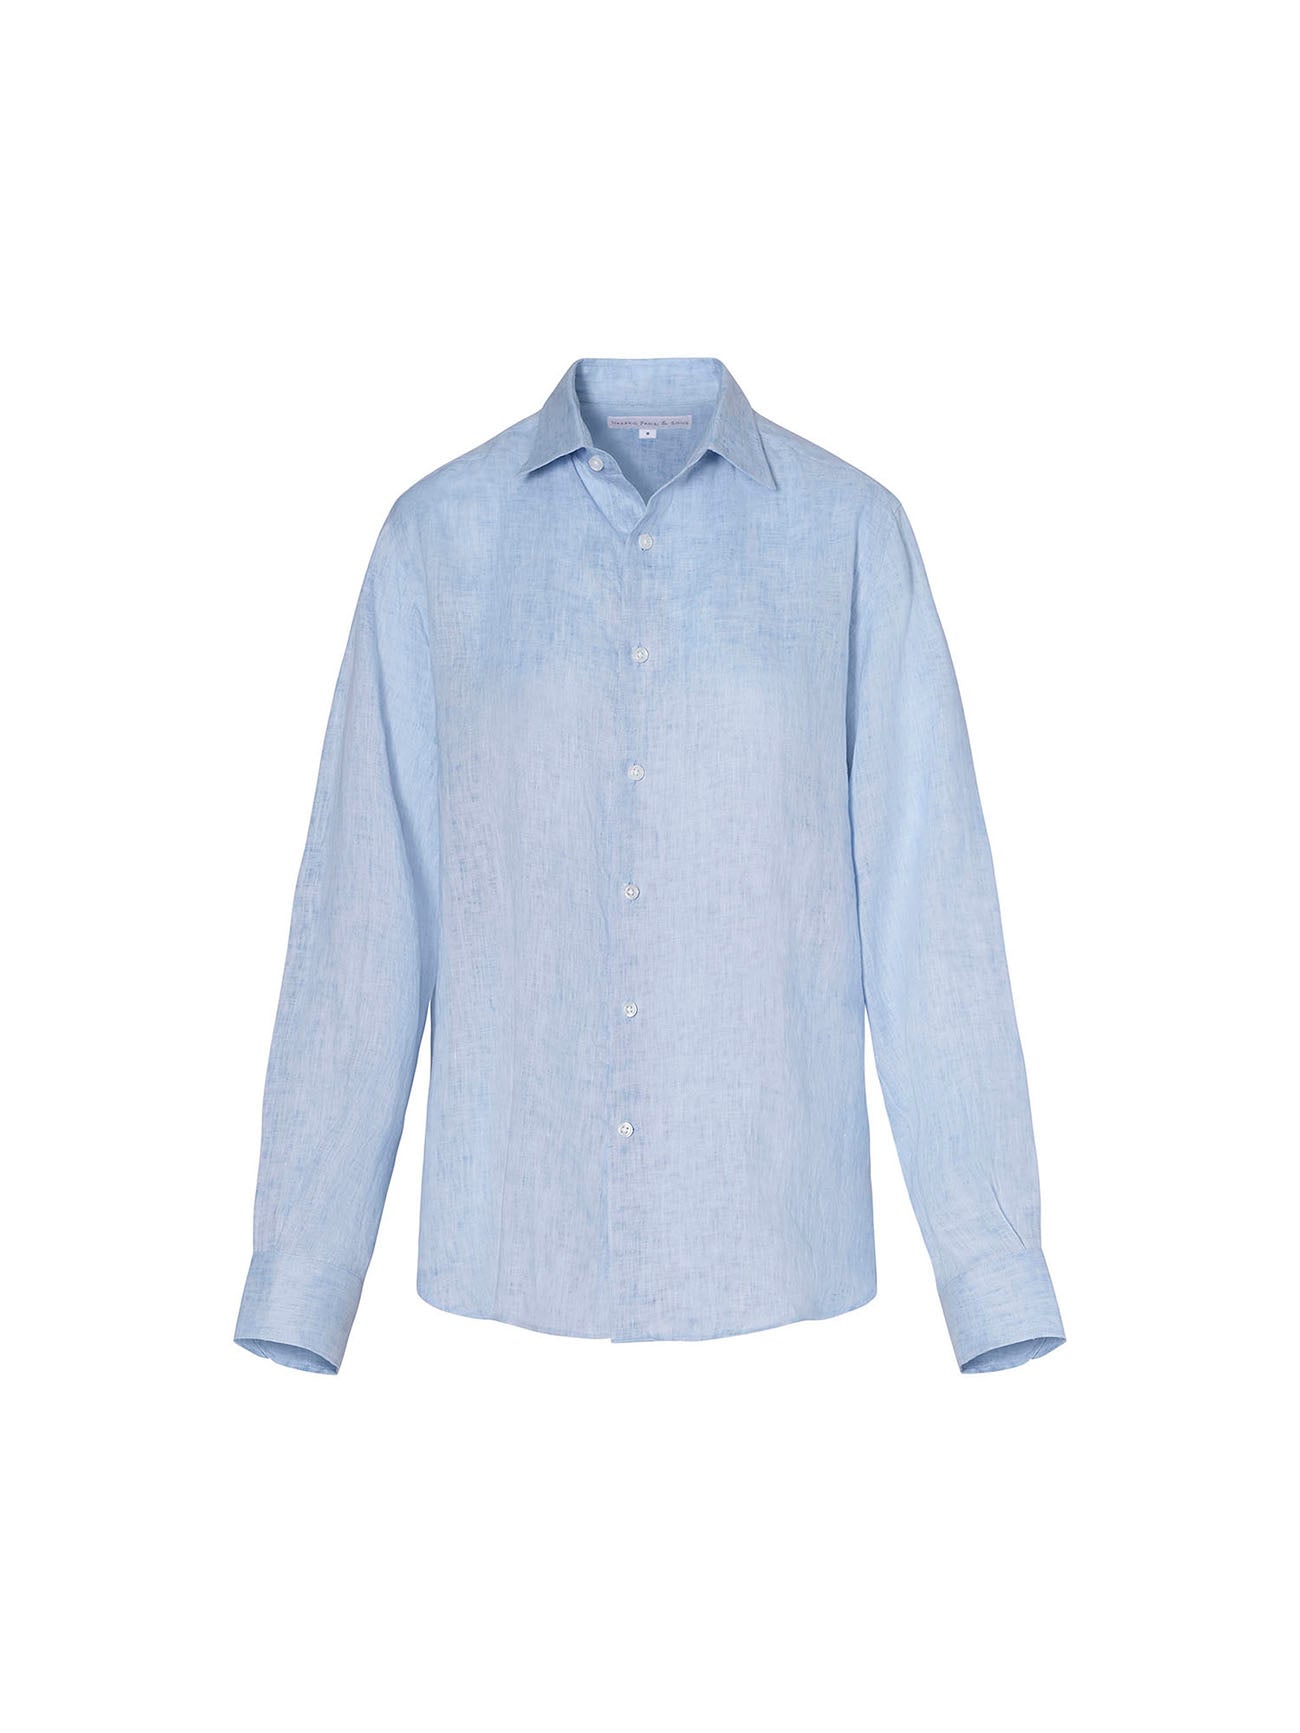 Sorrento Pale Blue Linen Shirt